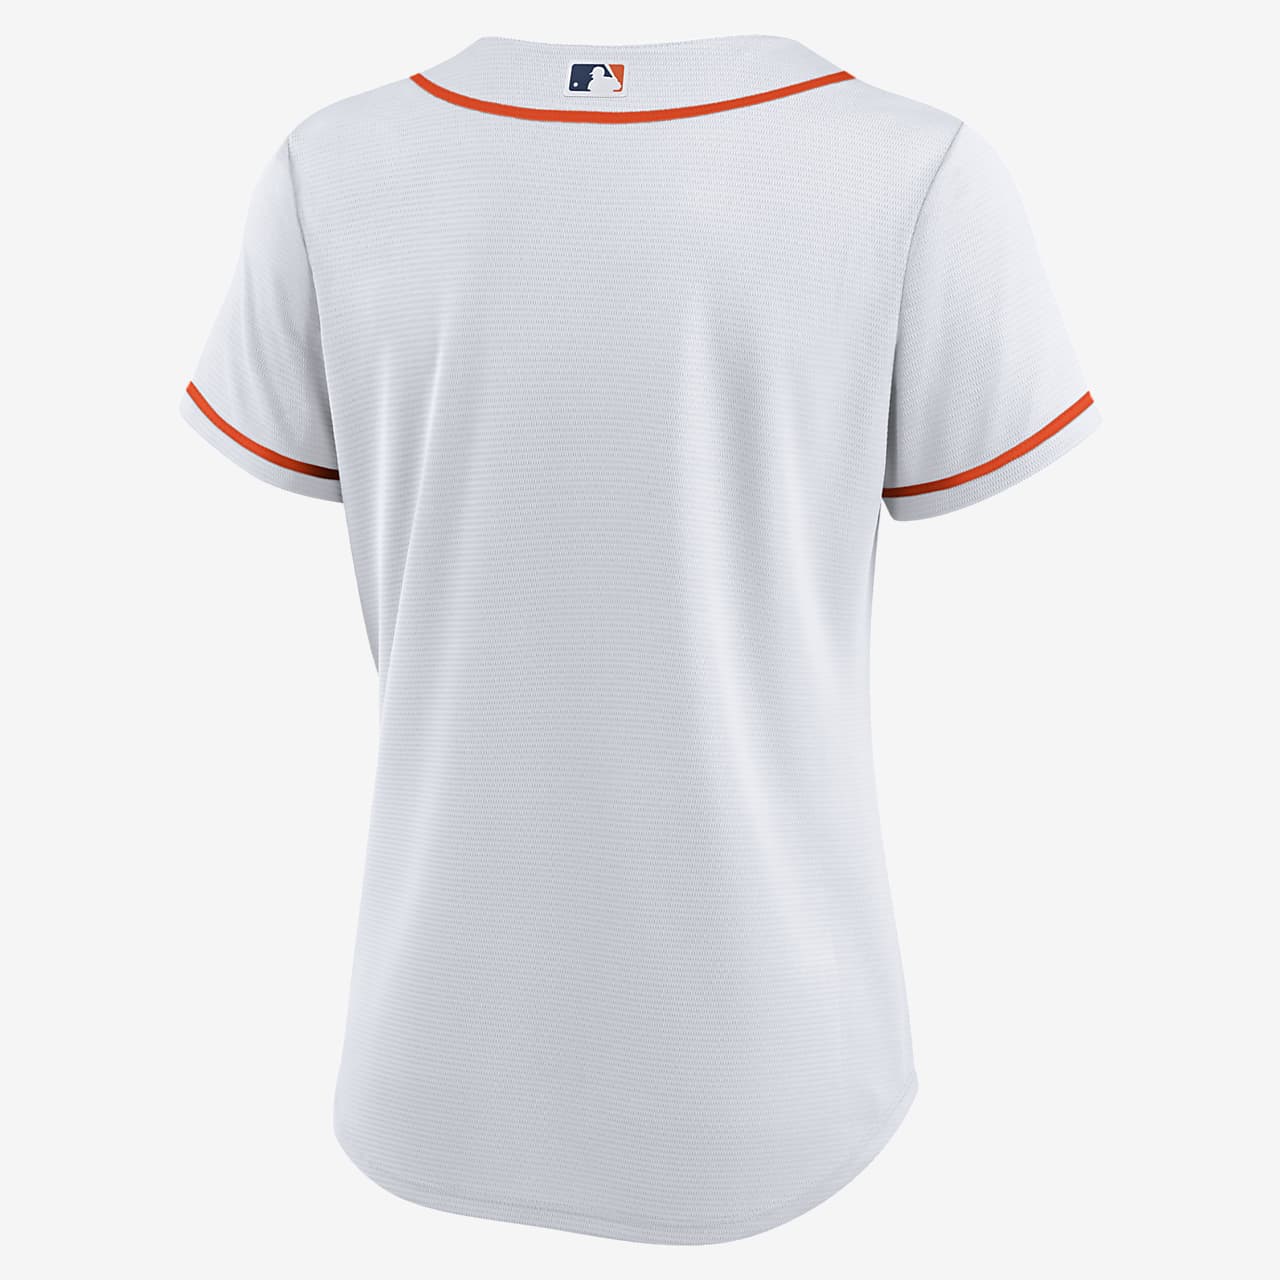 Camiseta de béisbol réplica para mujer MLB Houston Astros.